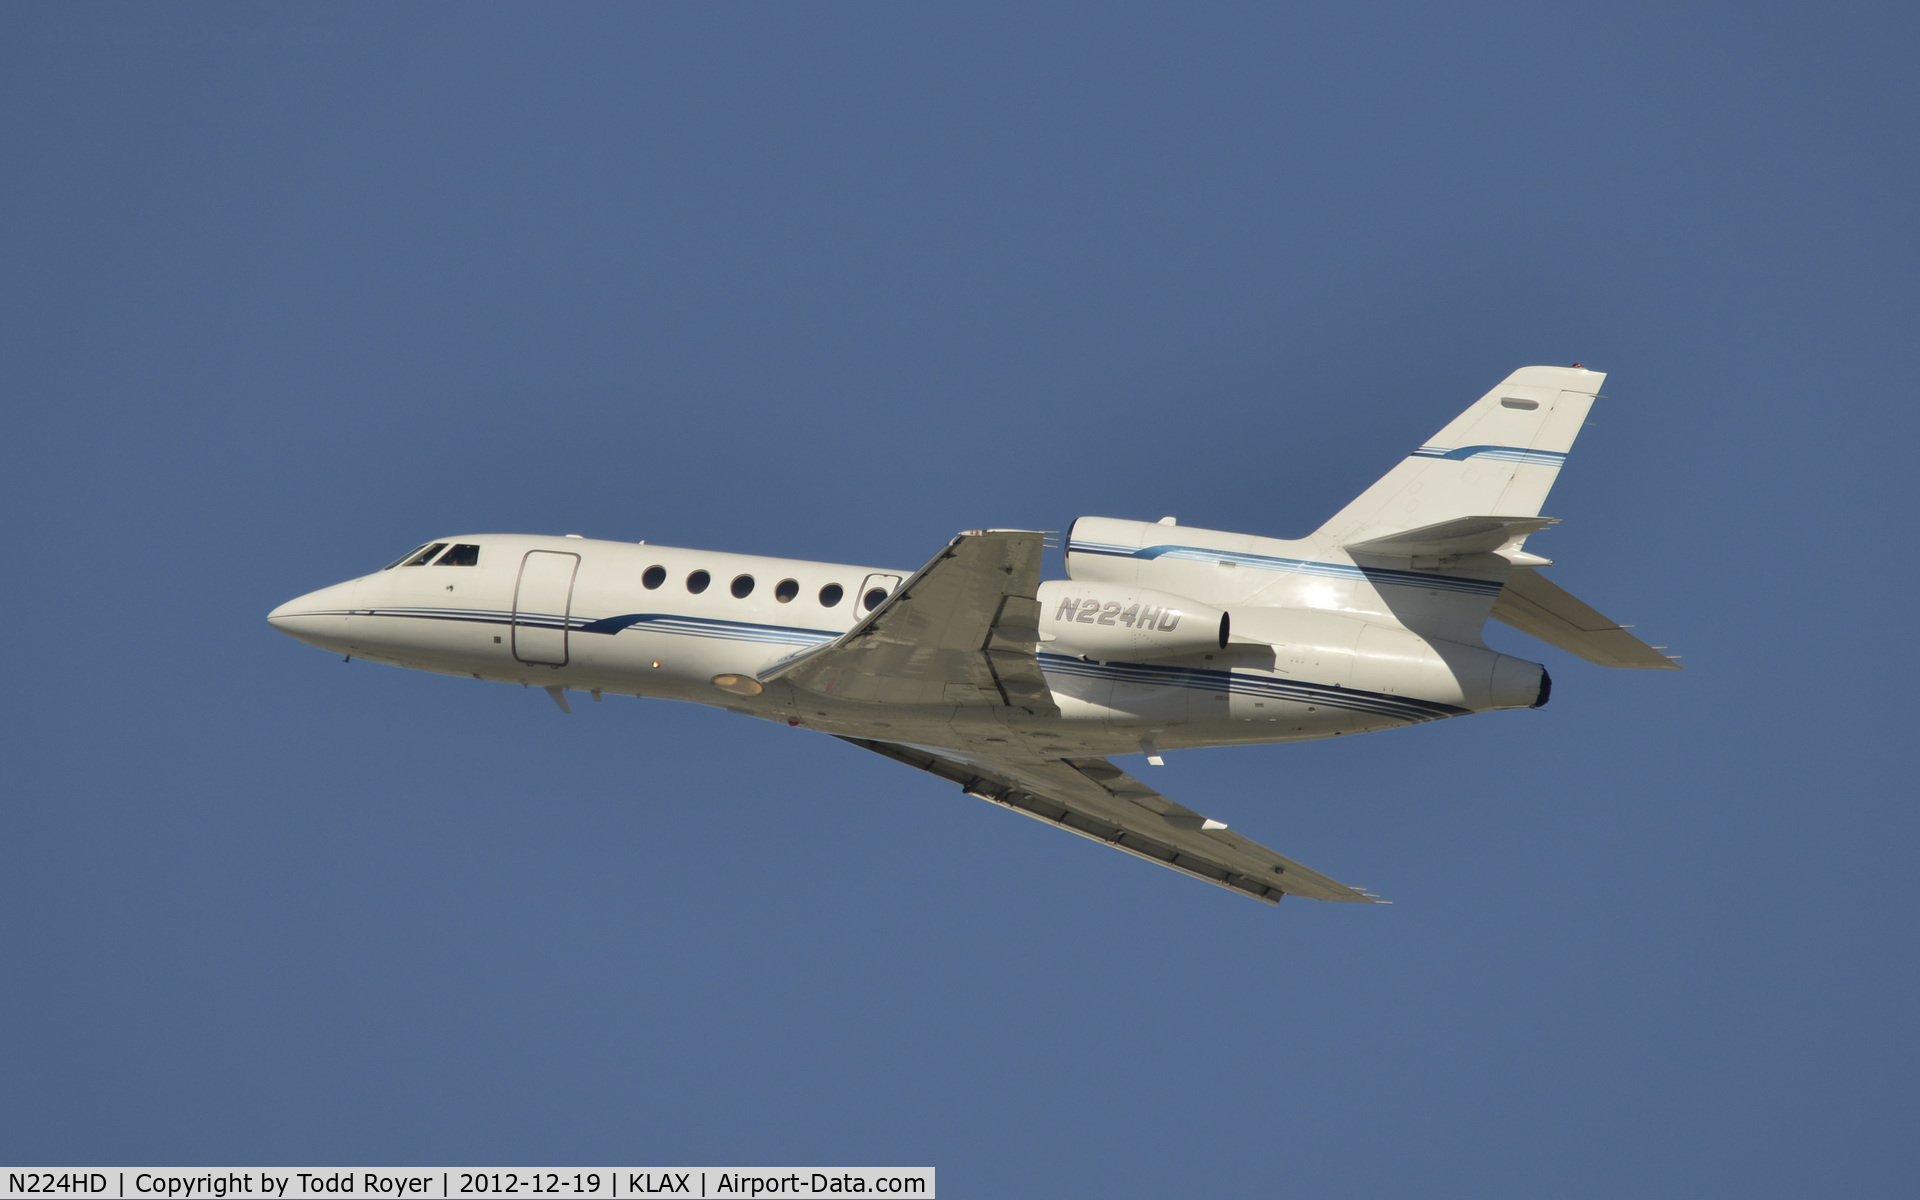 N224HD, 2004 Dassault Mystere Falcon 50 C/N 336, Departing LAX